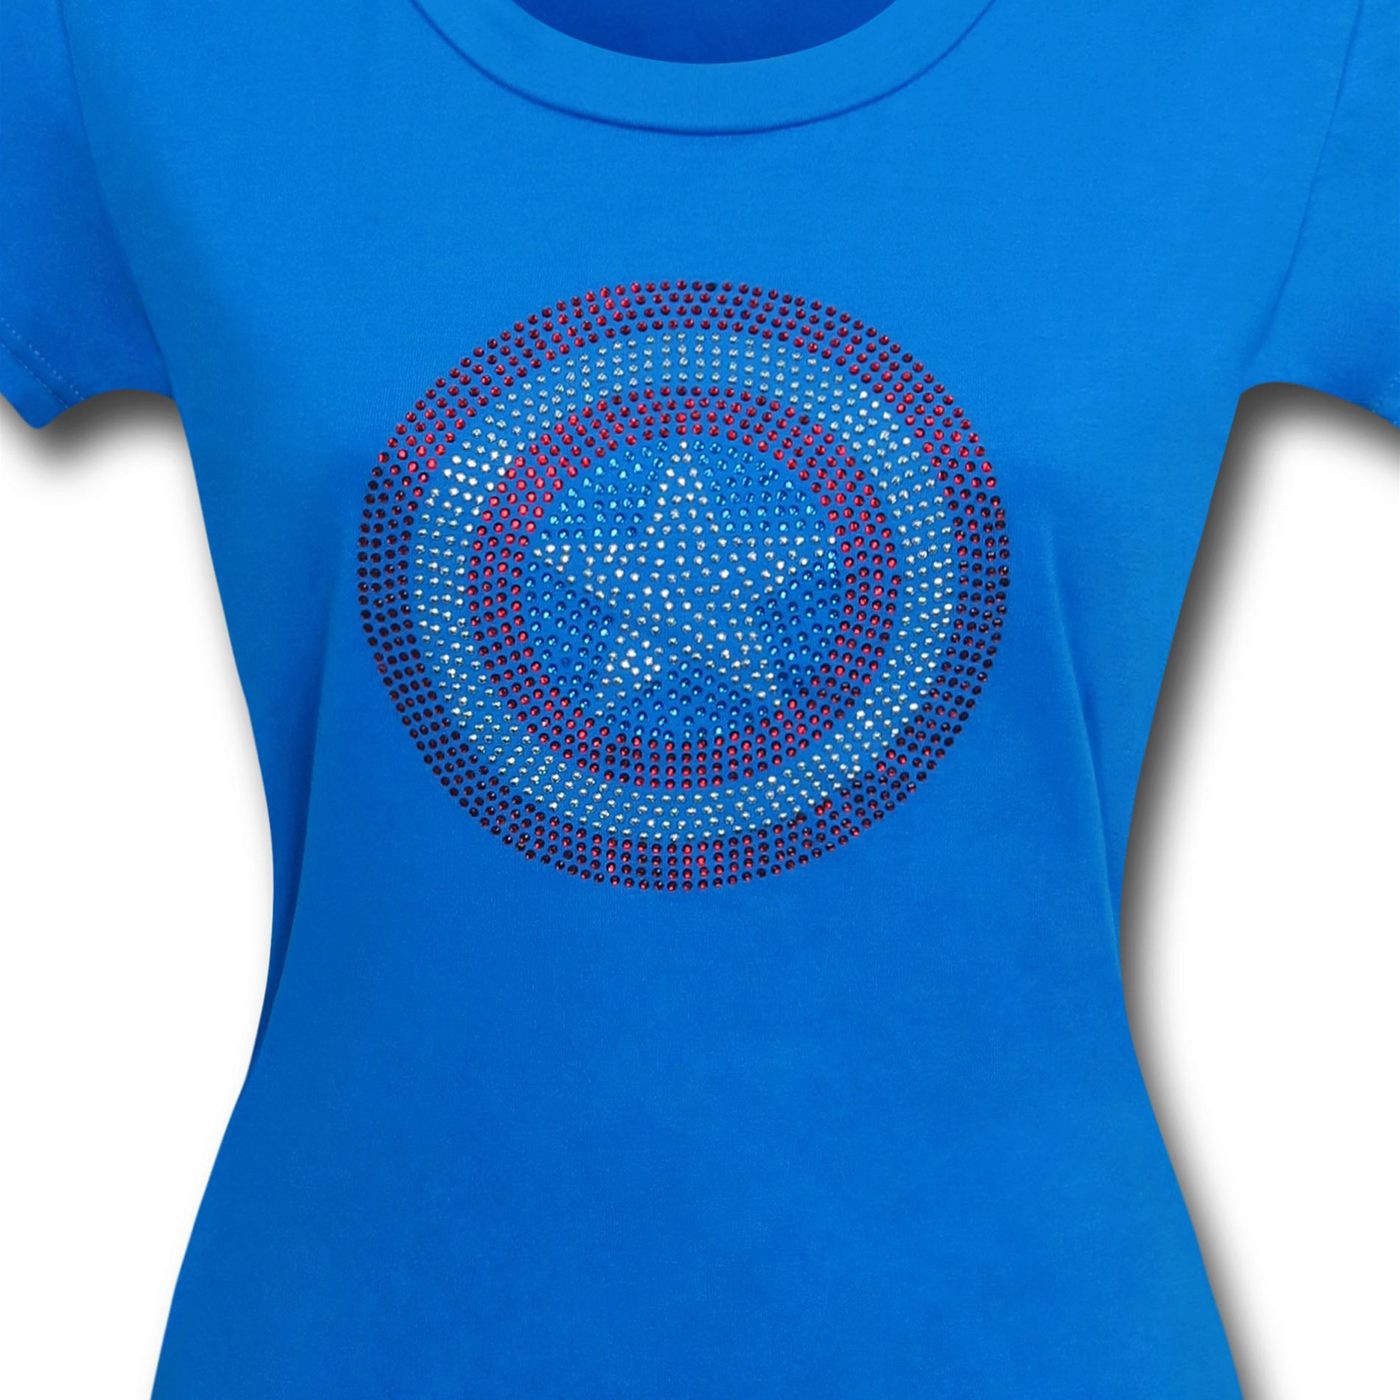 Captain America Women's Sequin Shield T-Shirt w/ Mask